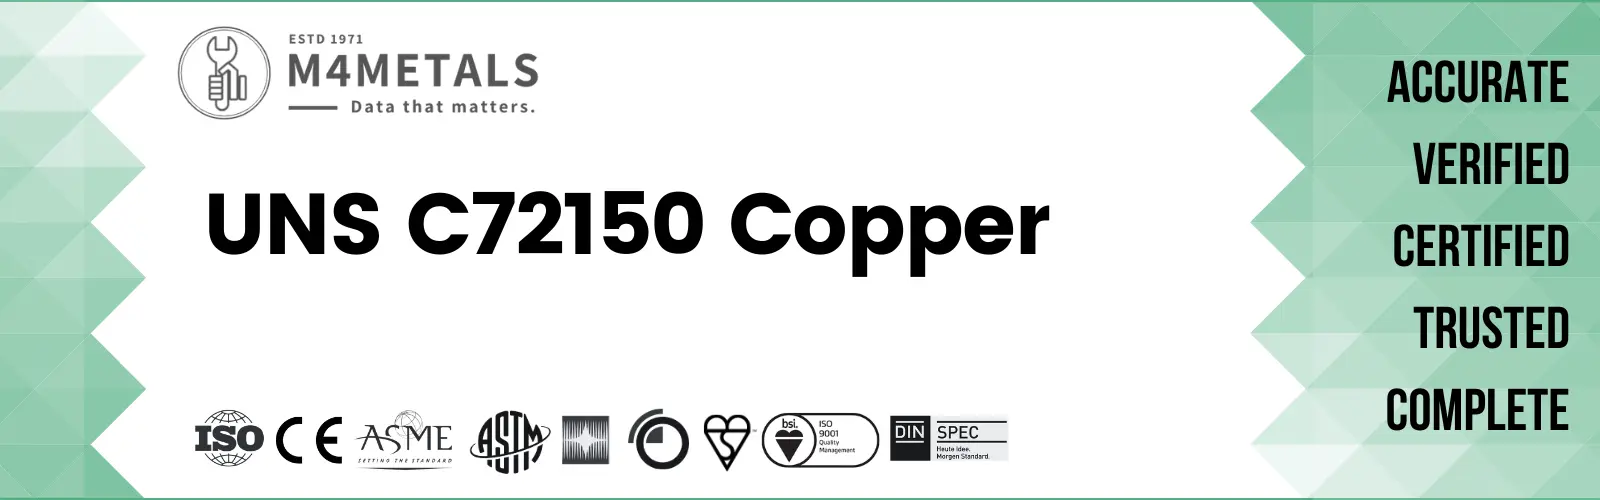 UNS C72150 Copper